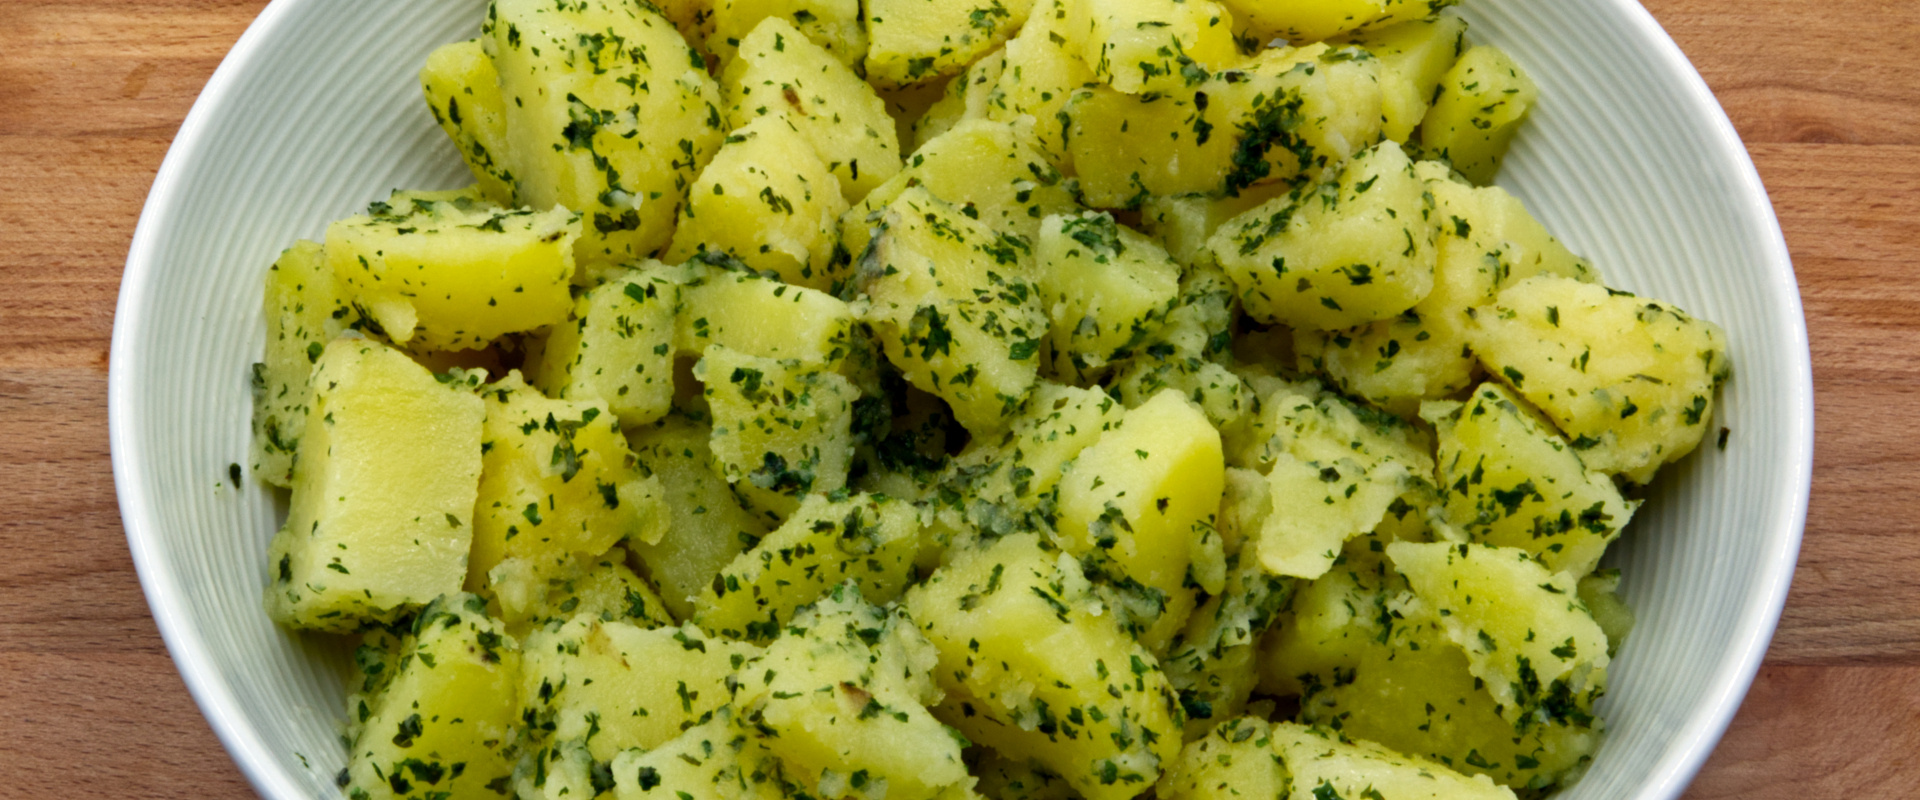 petrezselymes krumpli cover